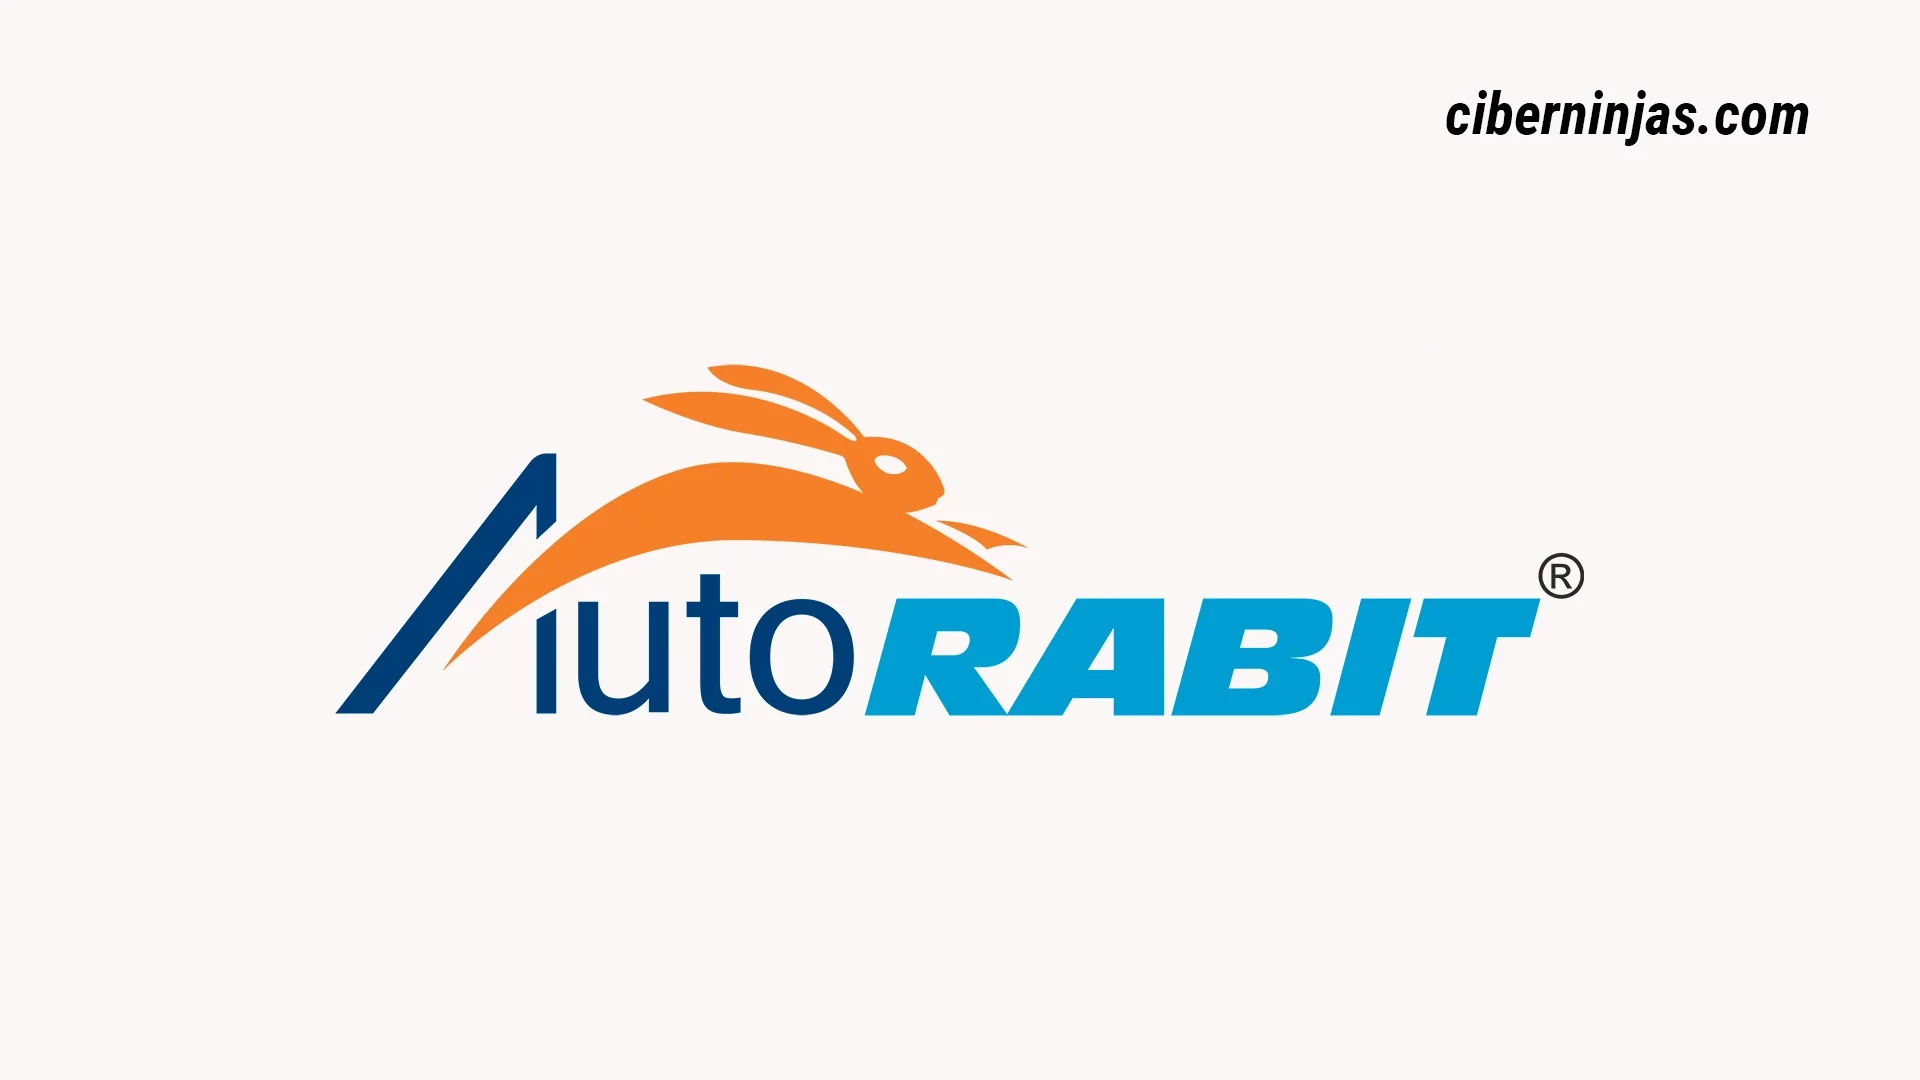 Logotipo del Software de CI/CD: Autorabit